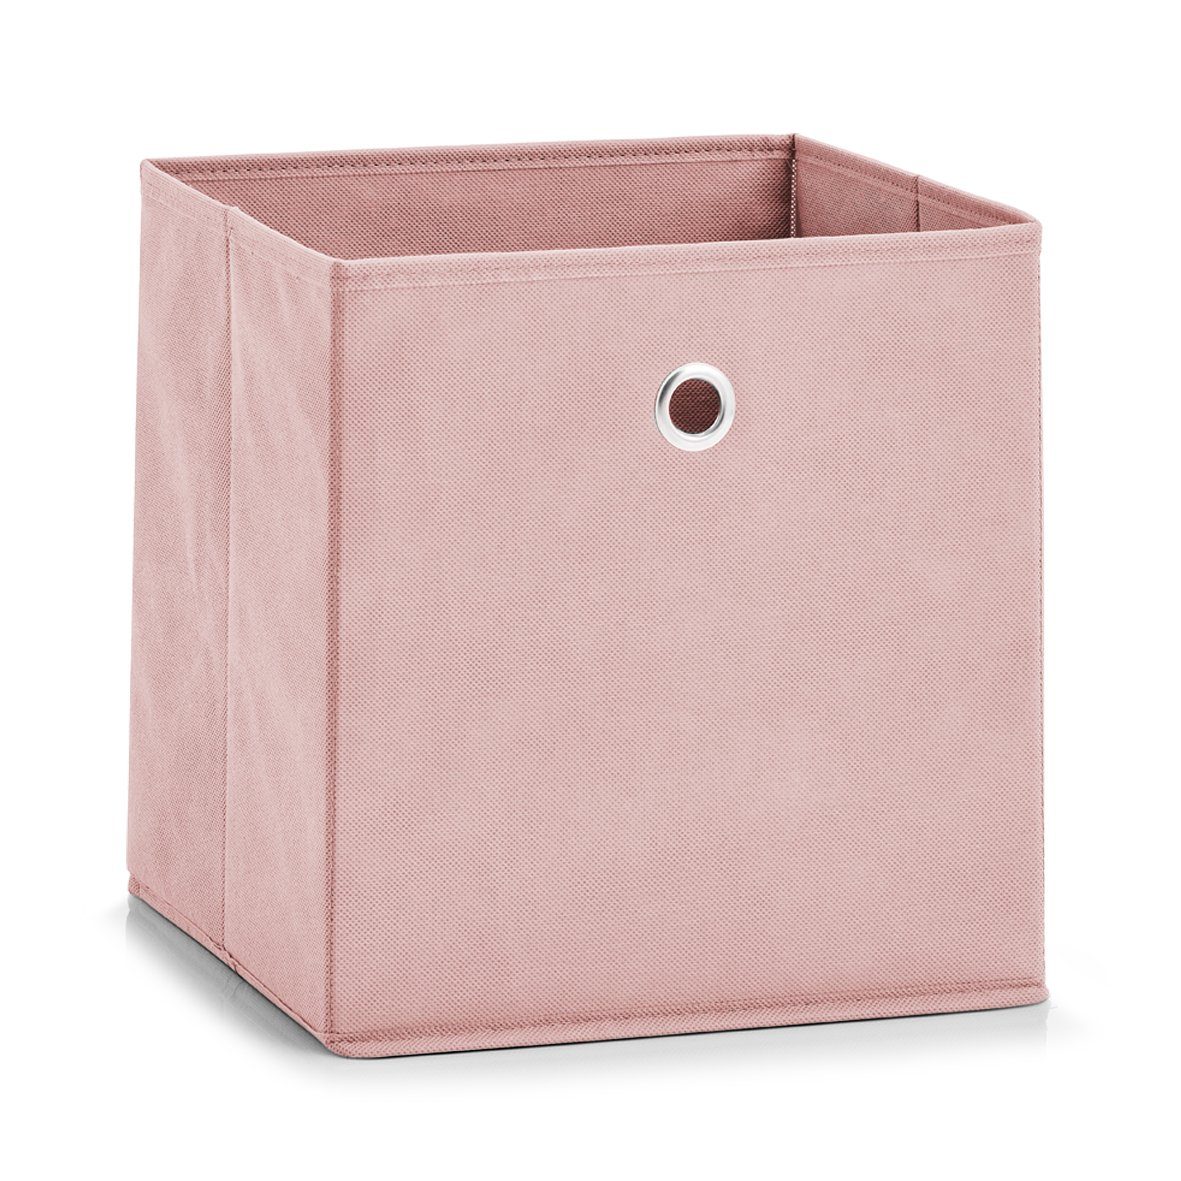 cm x 28 28 Aufbewahrungsbox, x 28 rosé, Aufbewahrungskorb Vlies, Present Zeller